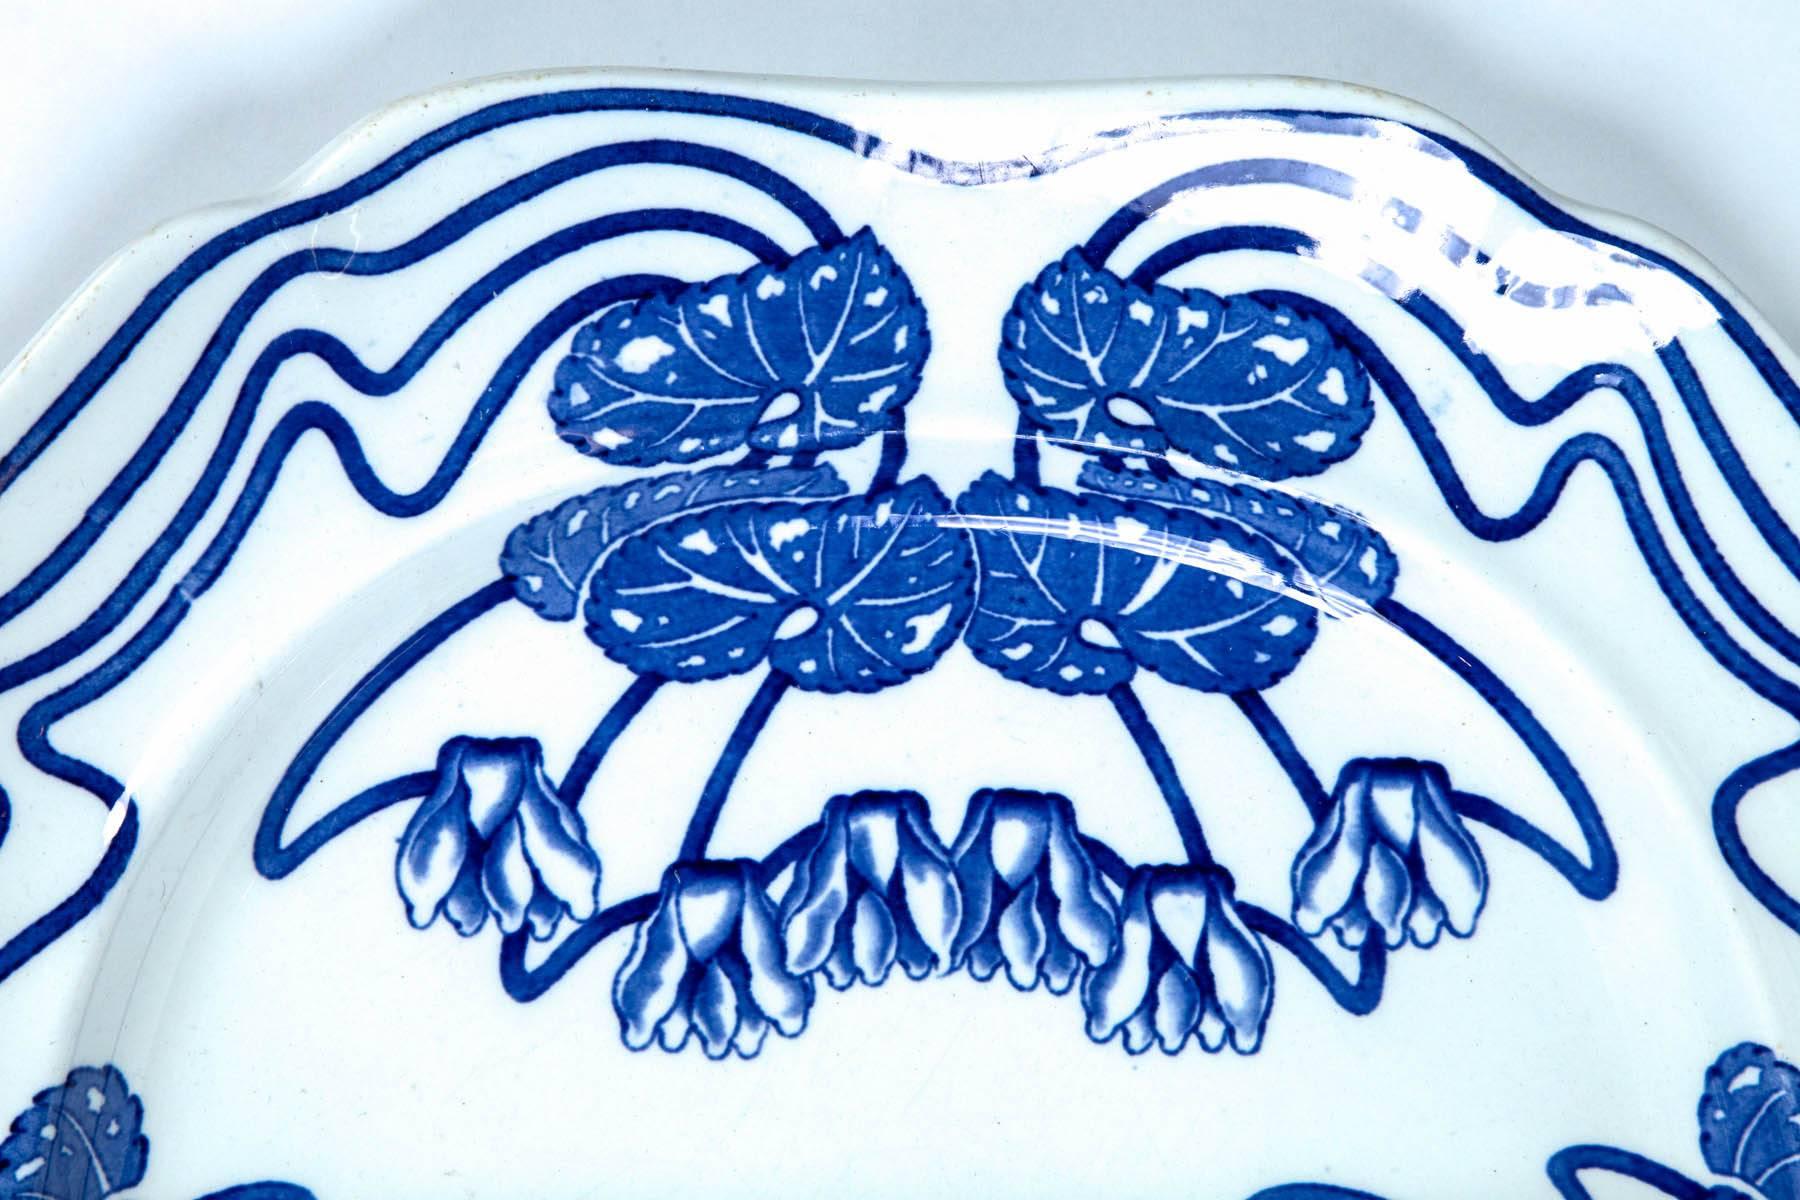 Ceramic serving platter, Cauldon, Staffordshire, England, circa 1900. Striking blue and white graphic design, 'alpine' pattern.